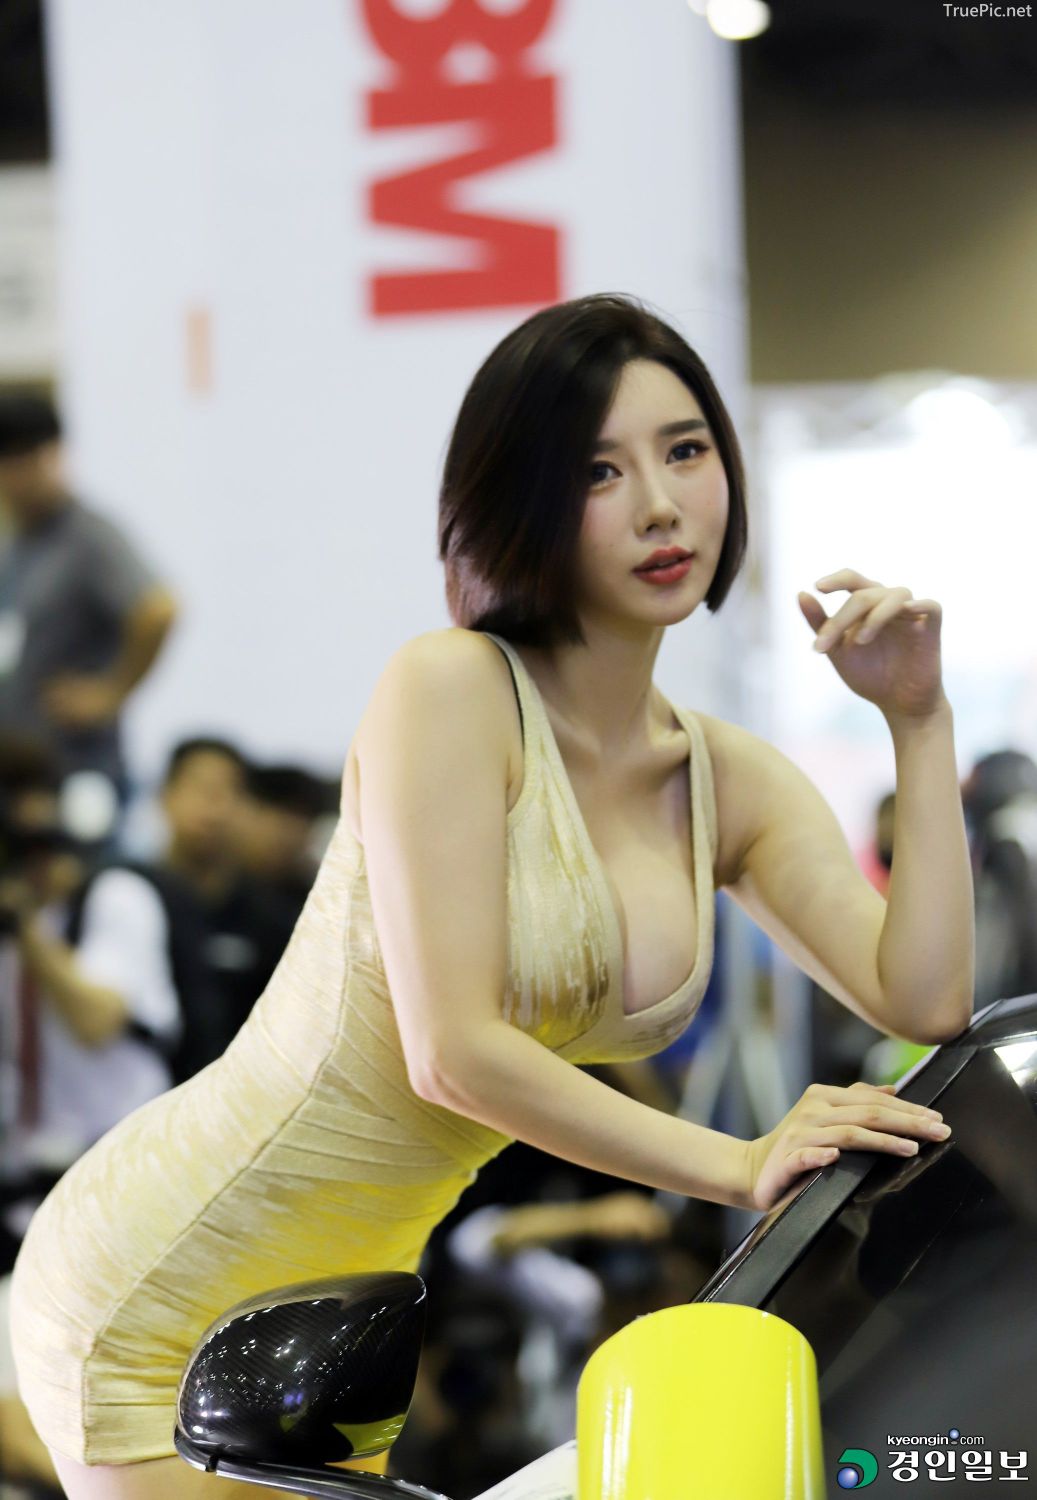 Korean Racing Model - Song Jooa - Seoul Auto Salon 2019 - Picture 66